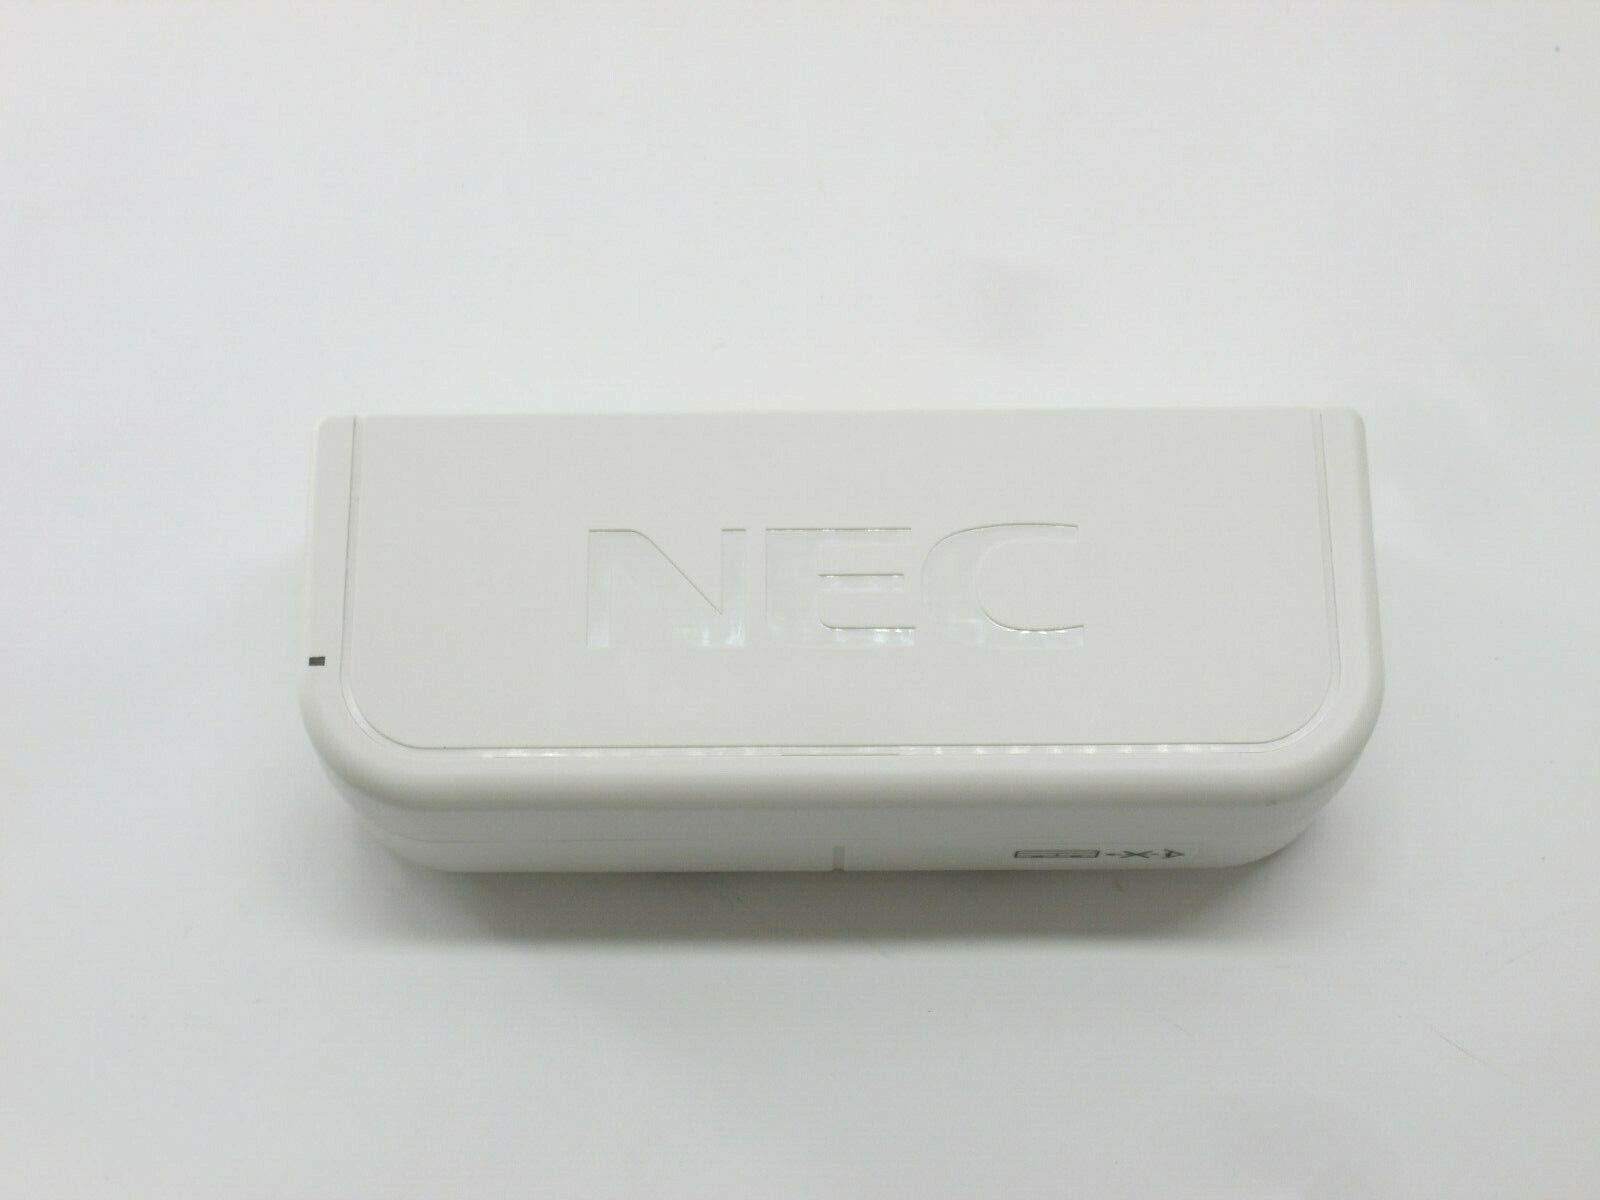 NEC Max 40% OFF NP01TM Interactive Touch NP-UM361Xi-WK NP-UM351W-WK Module Max 62% OFF